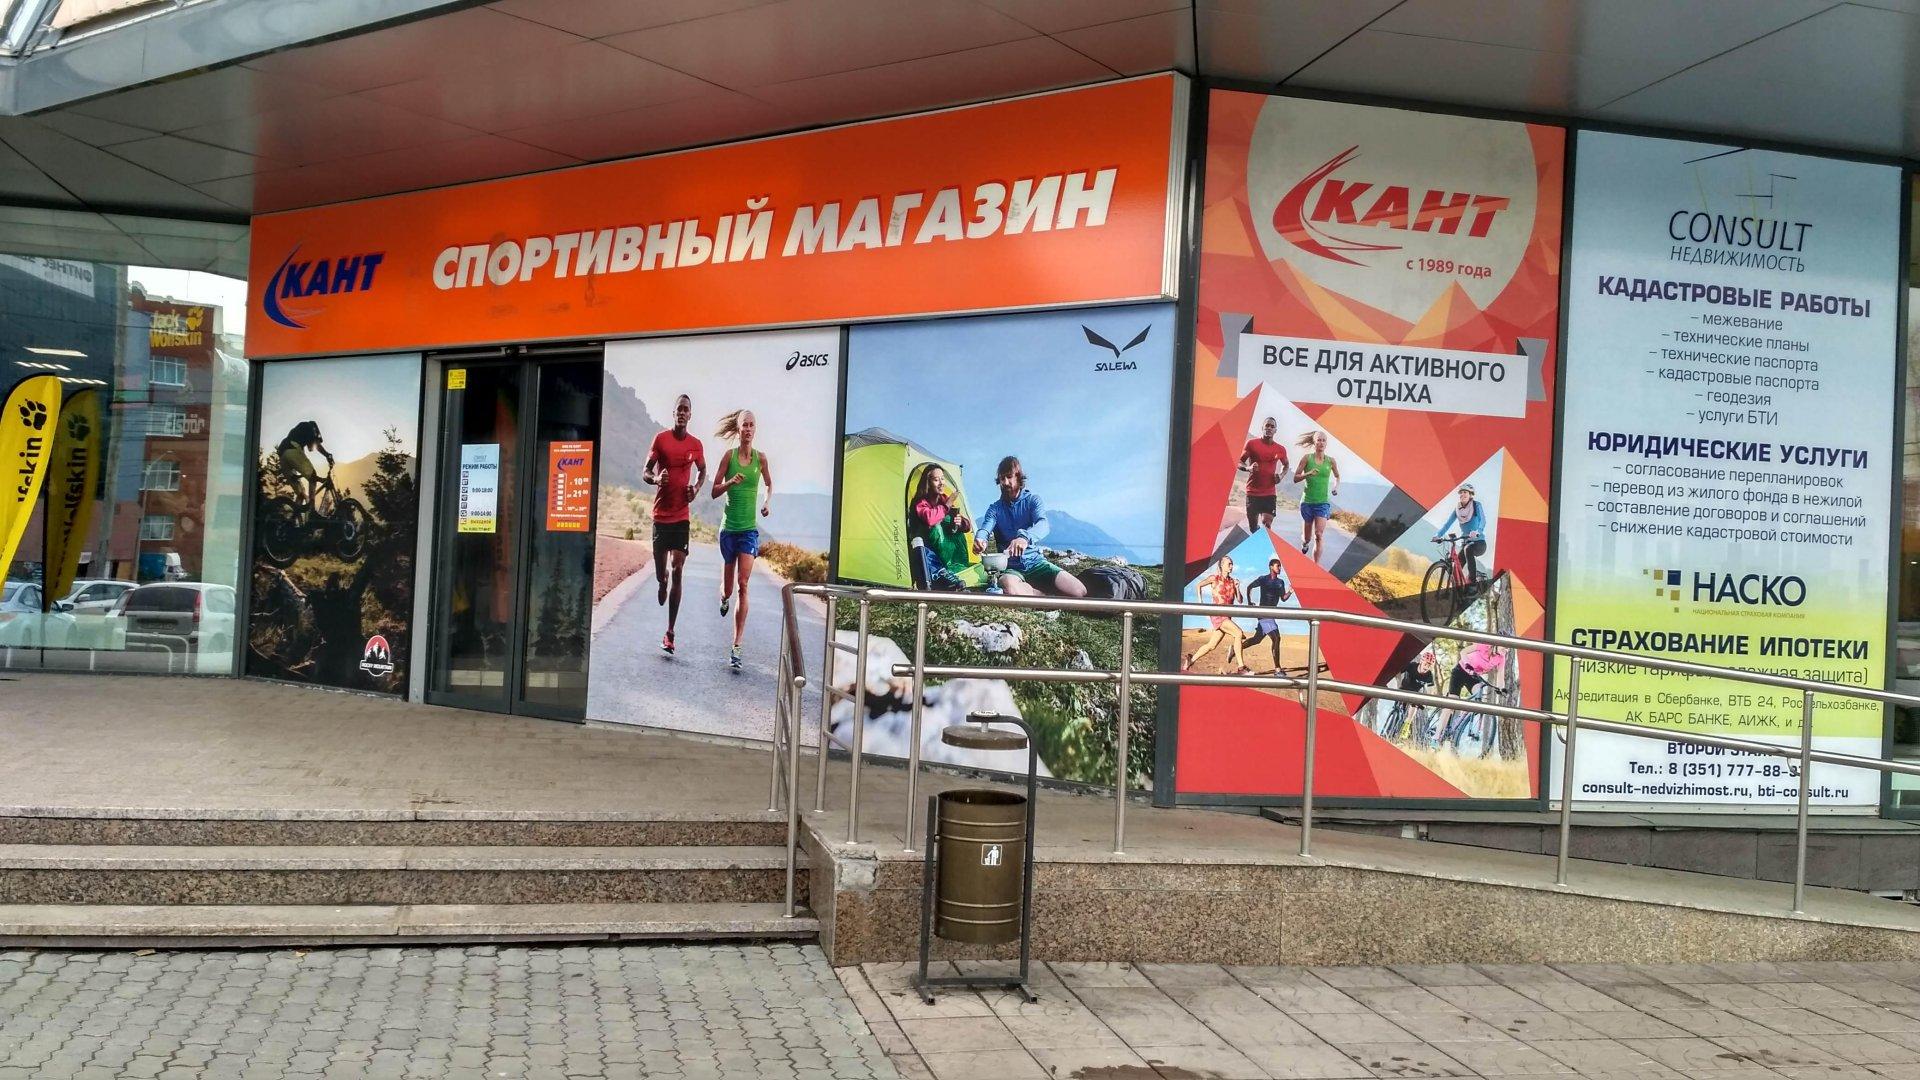 Сайт магазина кант москва. Кант магазин. Кант спортивный магазин.